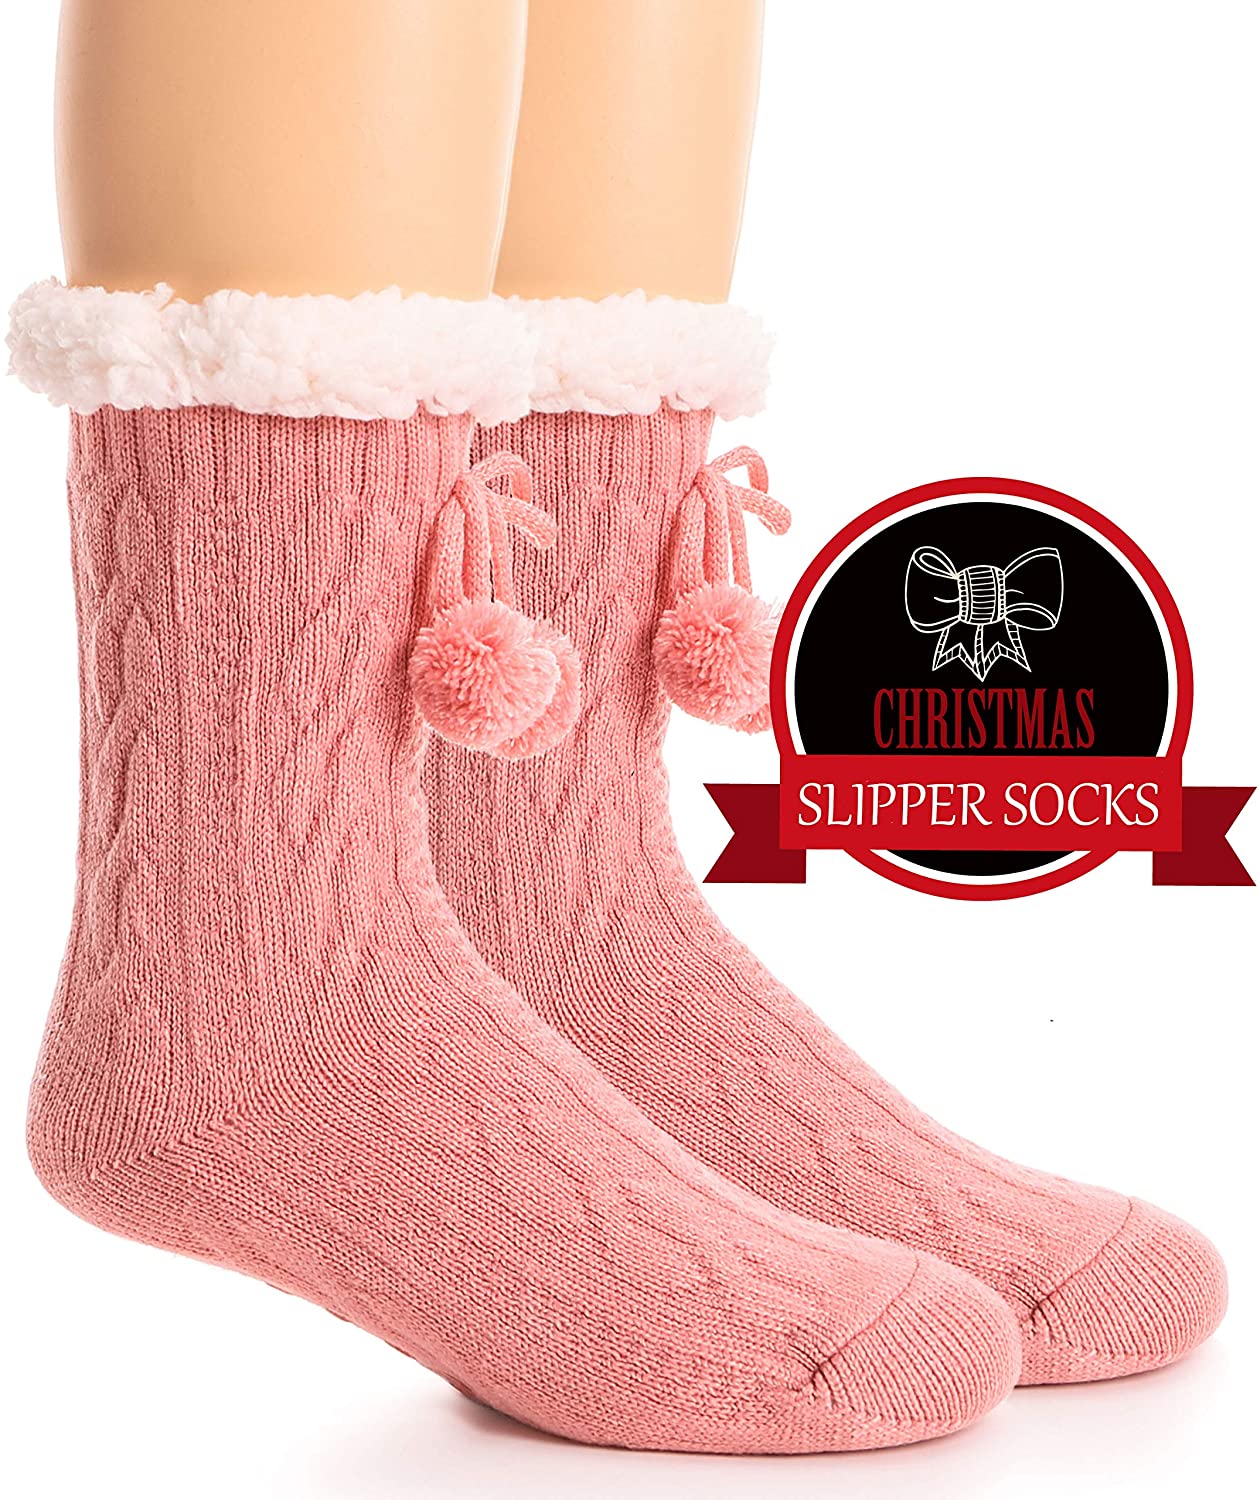 Womens Fuzzy Slipper Socks Warm Thick Knit Heavy Fleece lined Fluffy Christmas Stockings Winter Socks